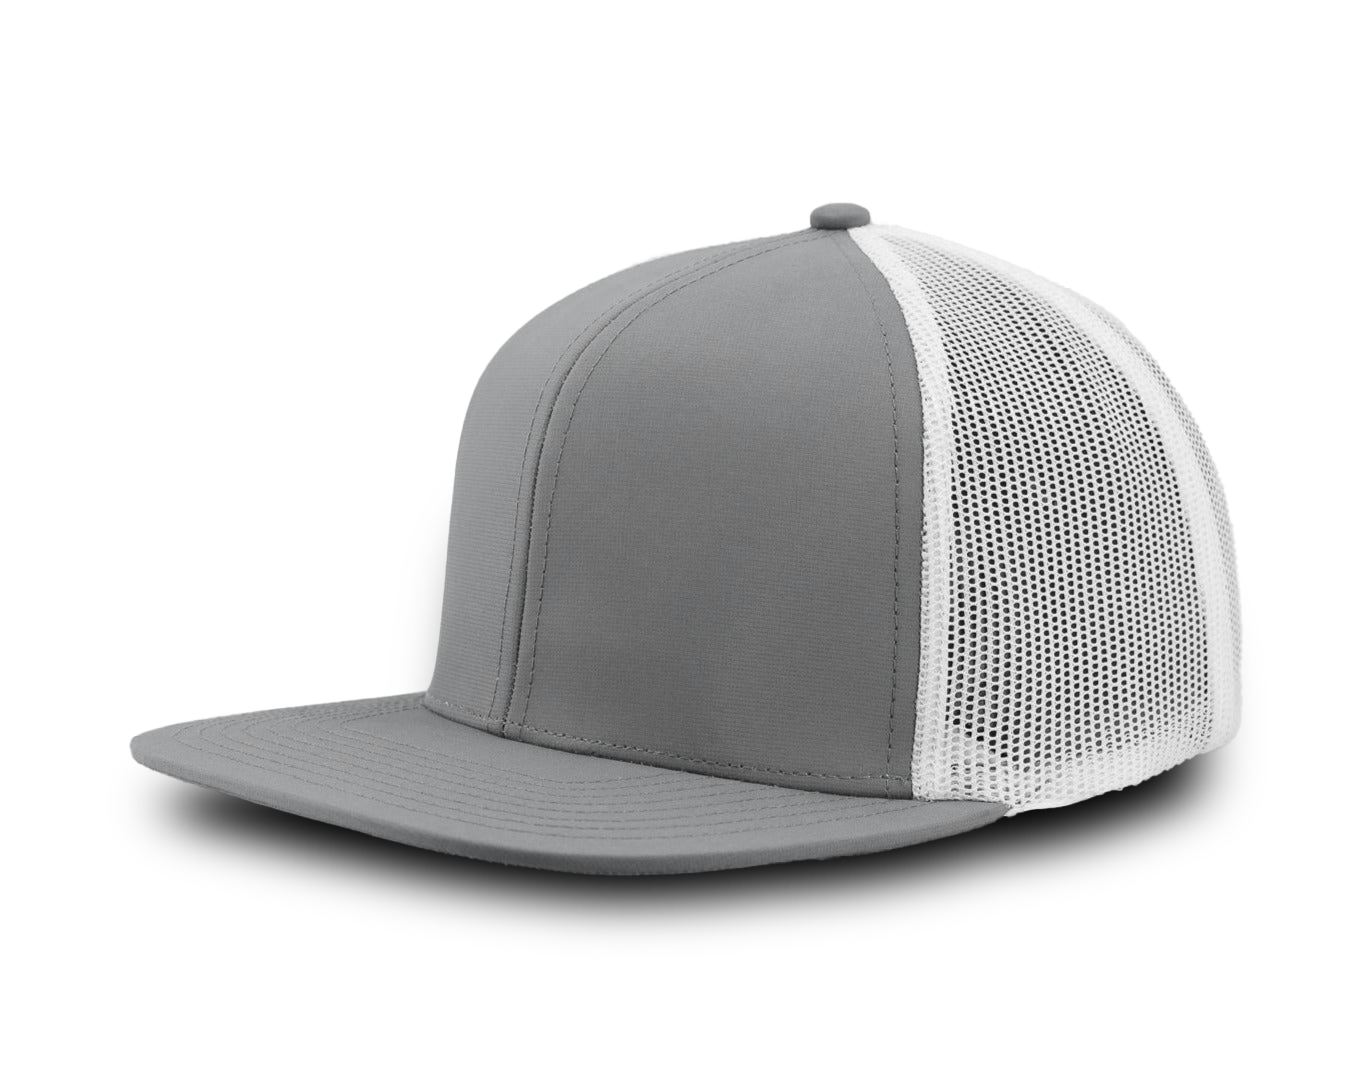 GENERAL-Custom hat-Flatbill-Snapback-charcoal-white- Zapped Headwear